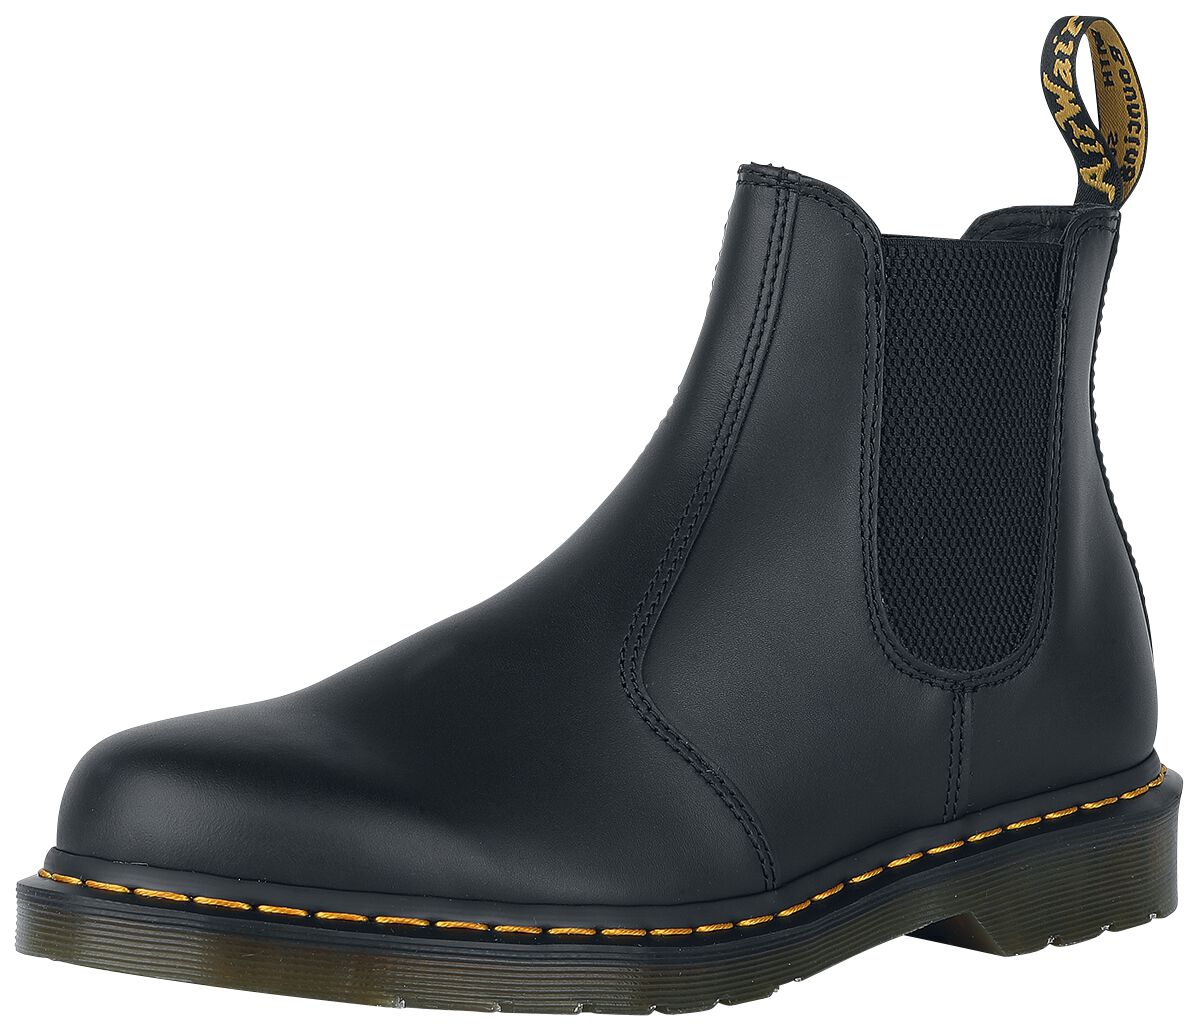 Dr. Martens - Rockabilly Boot - 2976 Black Nappa - EU37 bis EU46 - Größe EU42 - schwarz von Dr. Martens